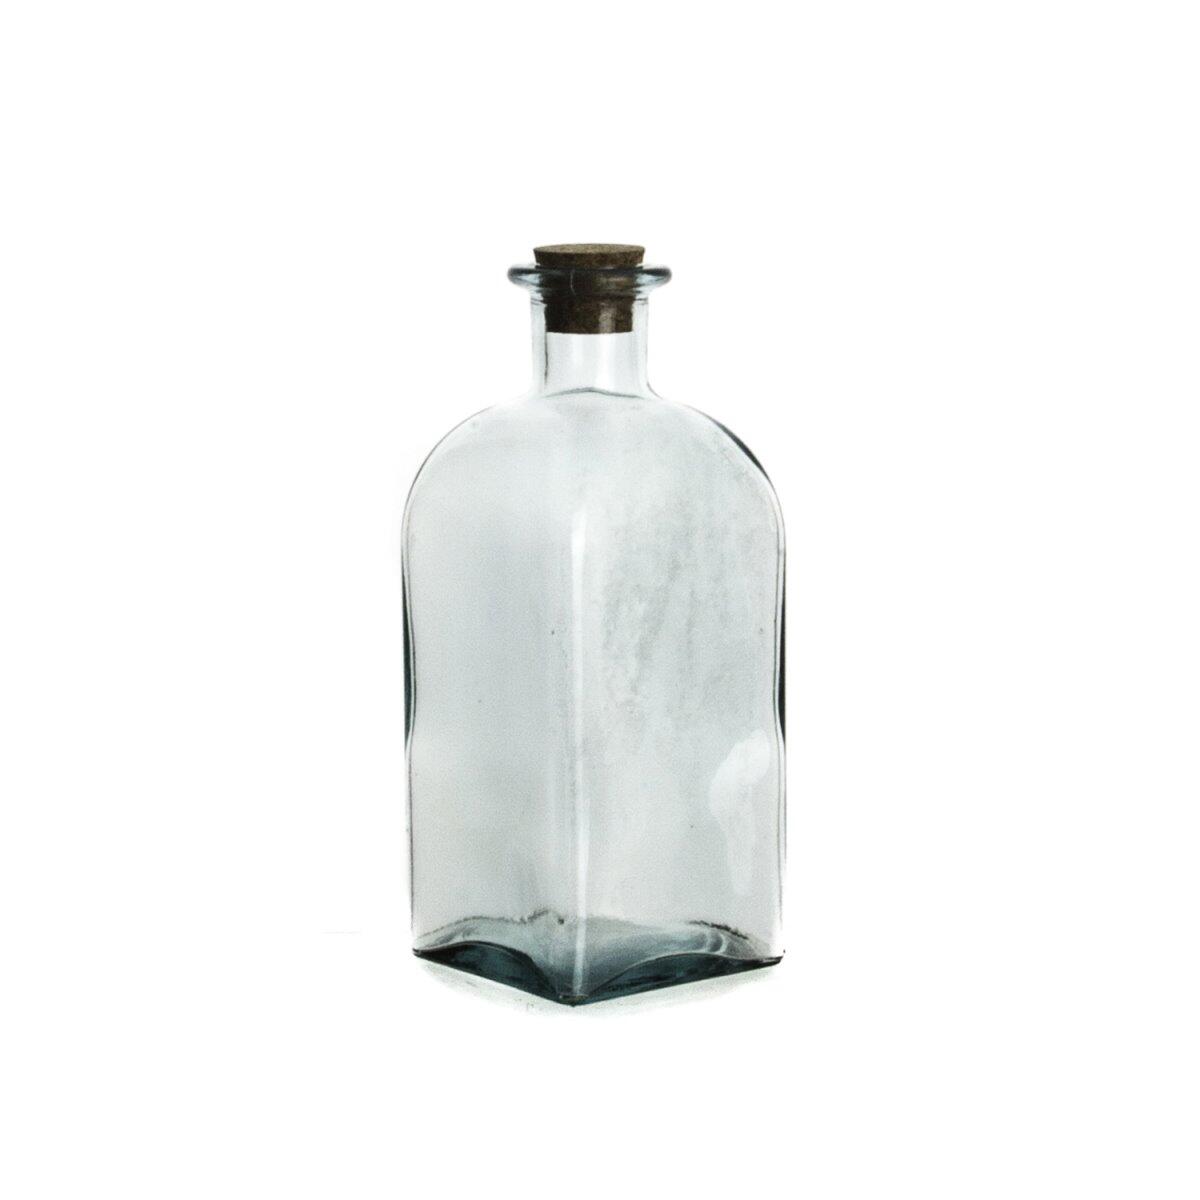 Sanmiguel Frasco Bottle 1 Liter